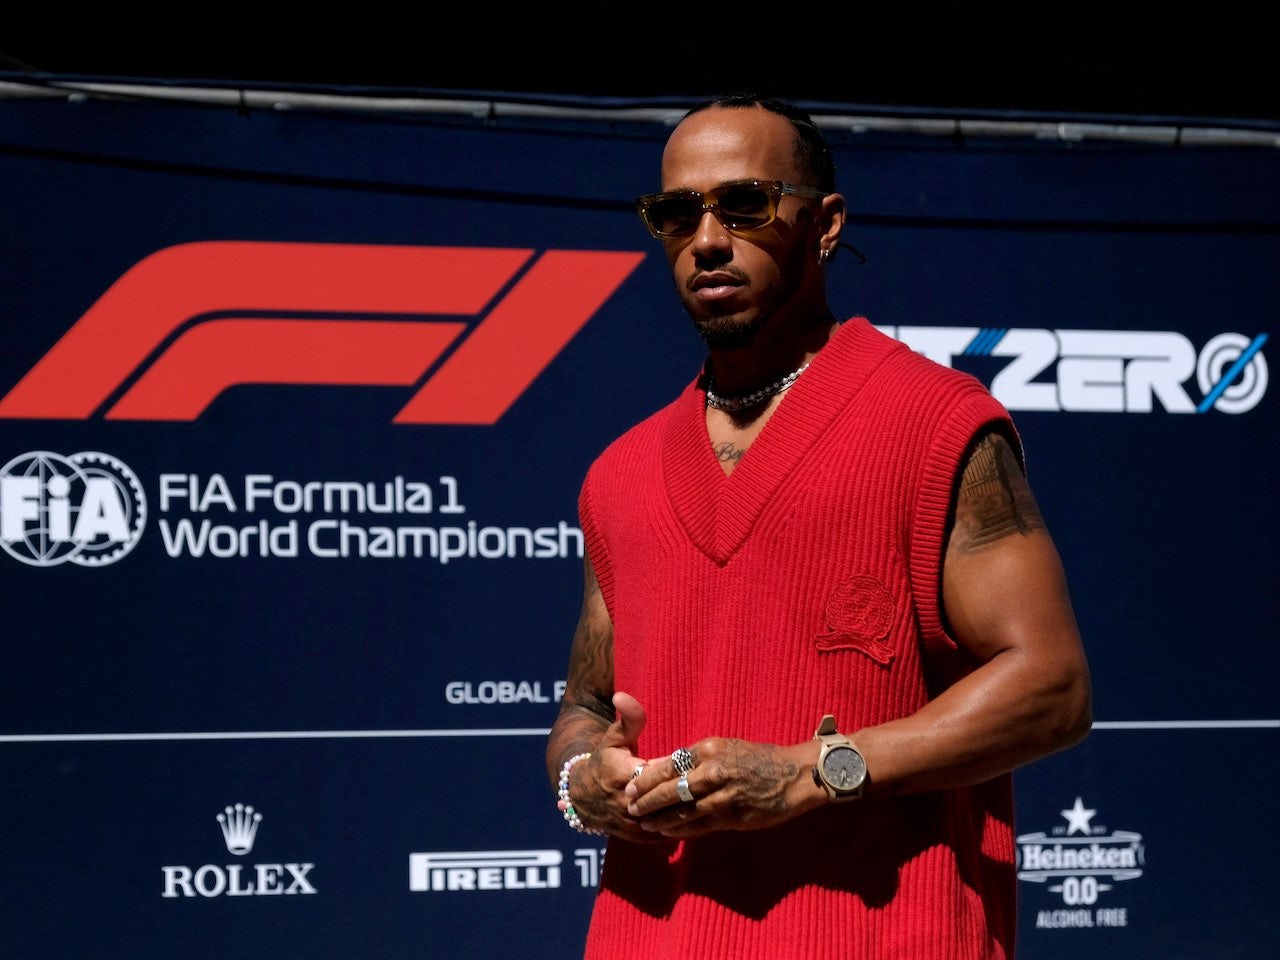 Hamilton news a blow to Ricciardo's future